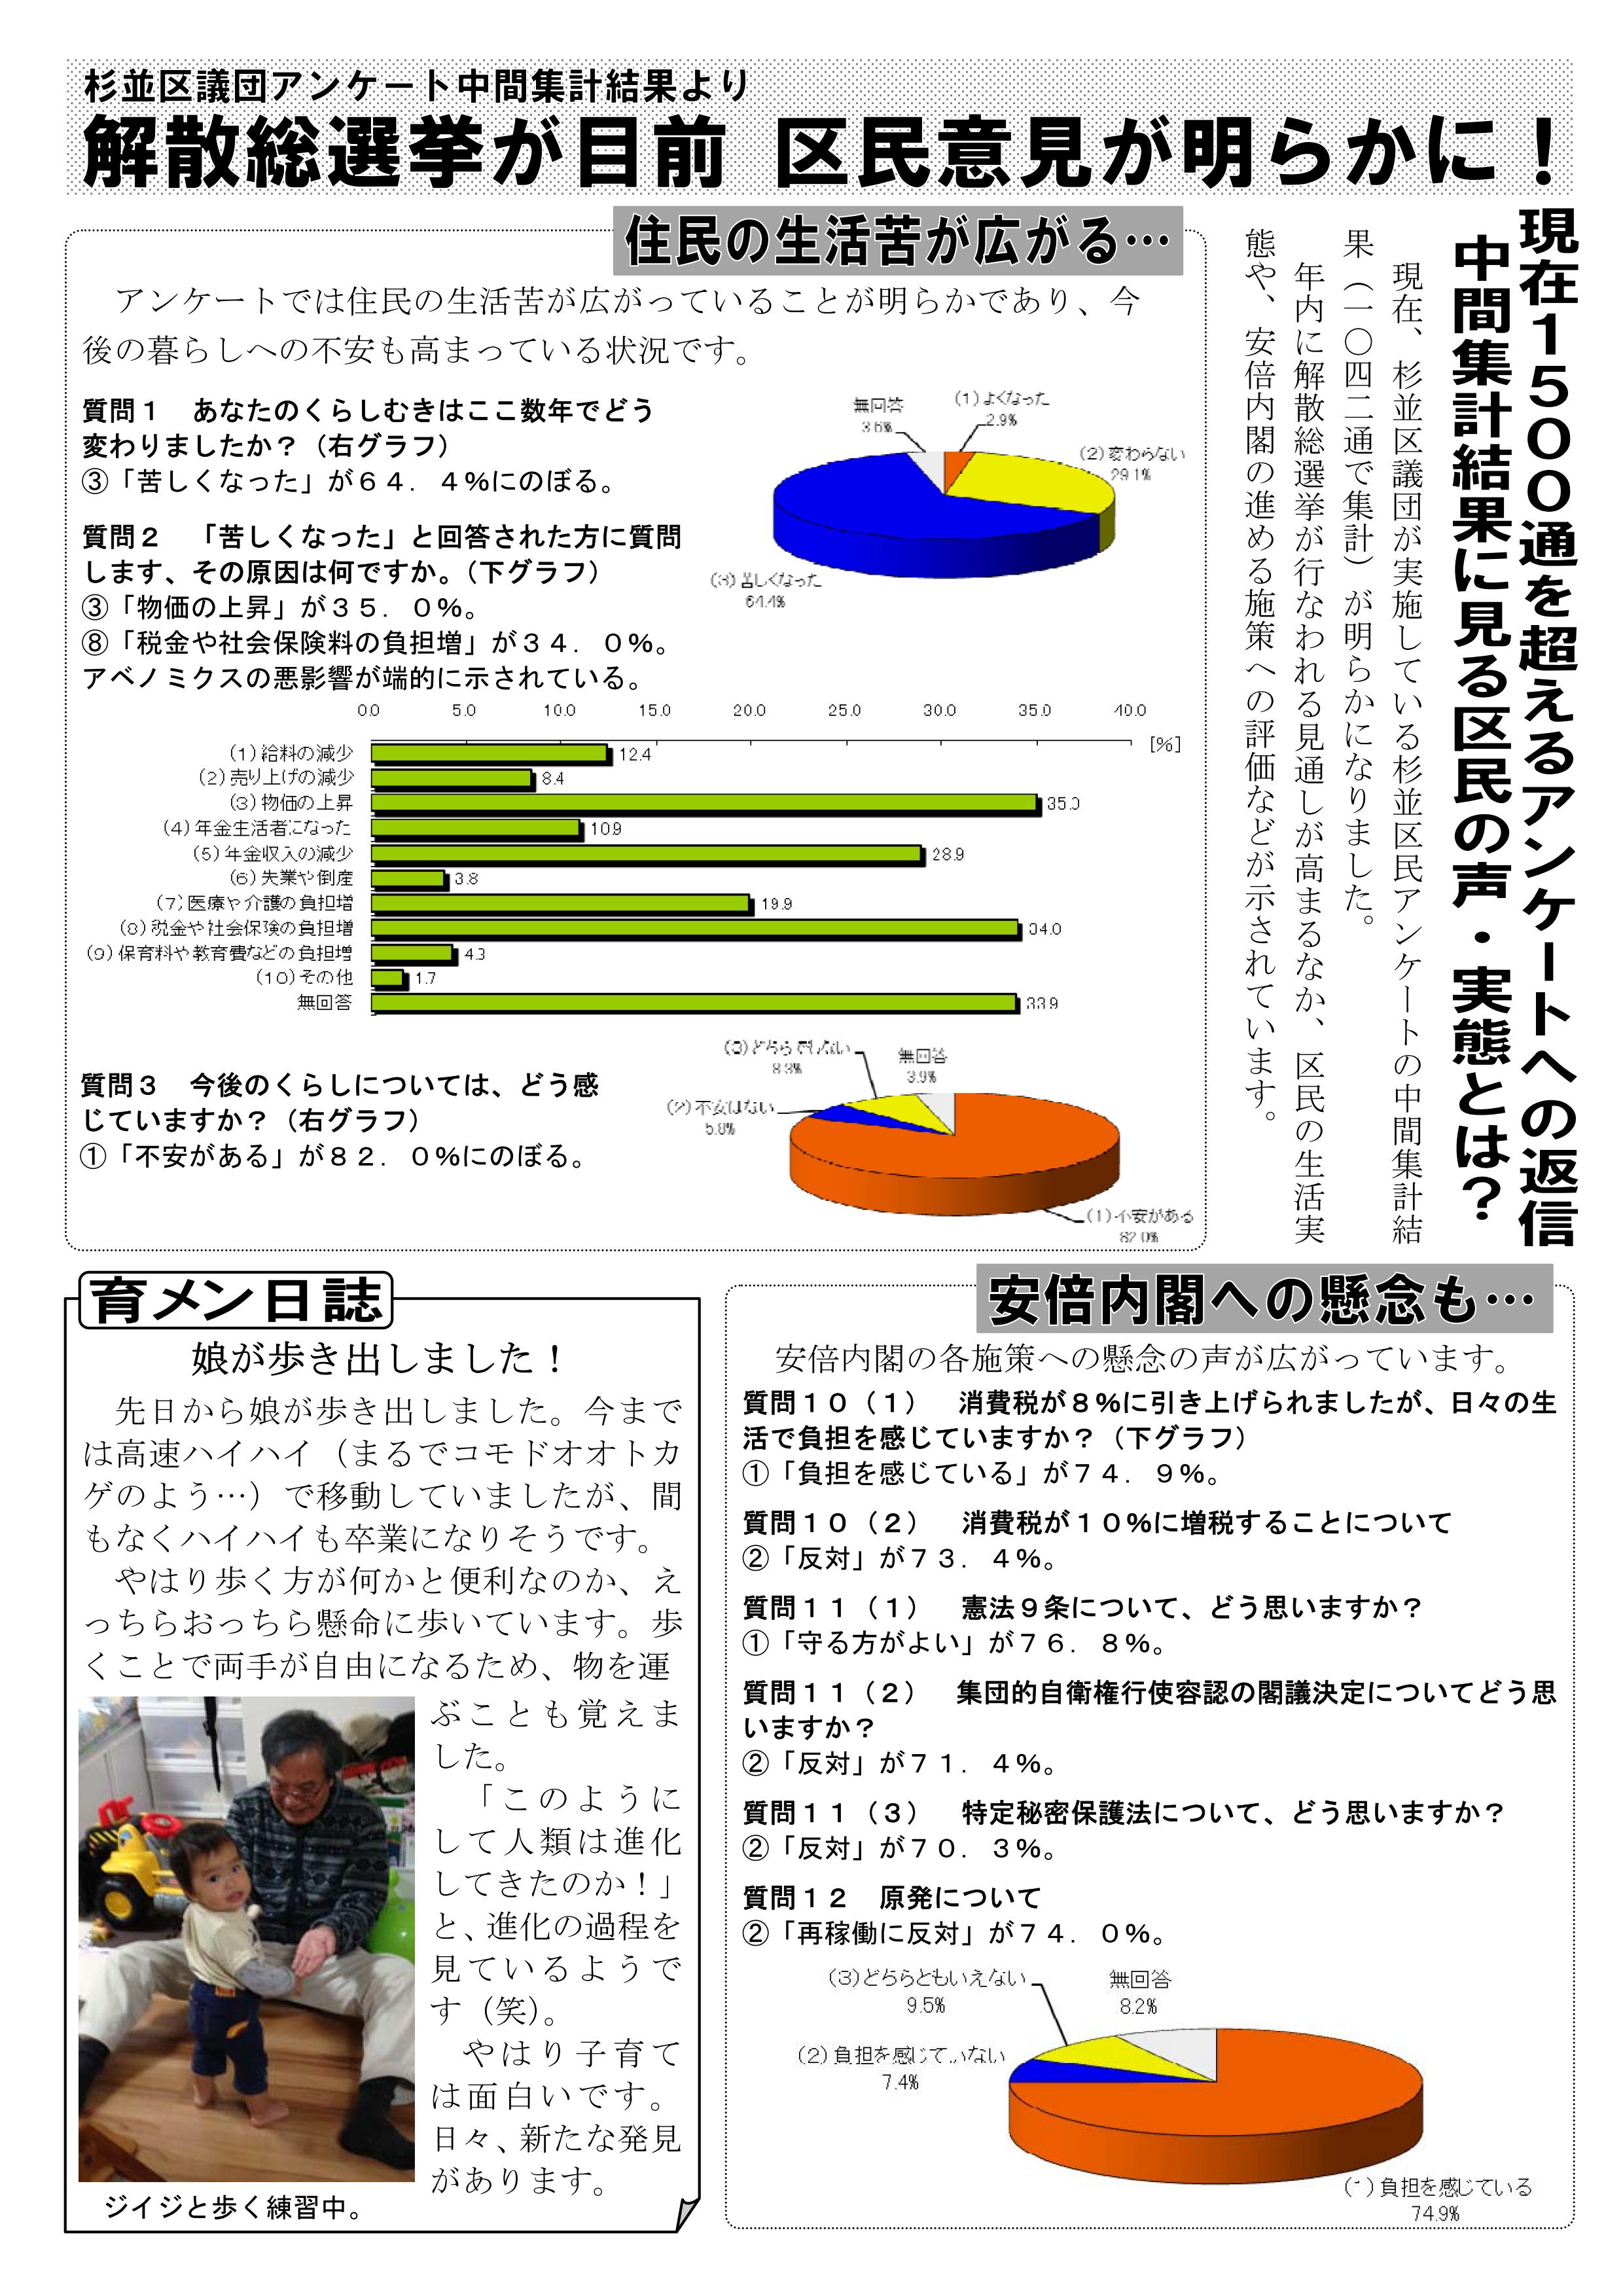 http://yamadakohei.jp/blog_upfile/%E9%80%B1%E5%88%8A%E5%B1%B1%E7%94%B0%E3%83%8B%E3%83%A5%E3%83%BC%E3%82%B9174_02.jpg